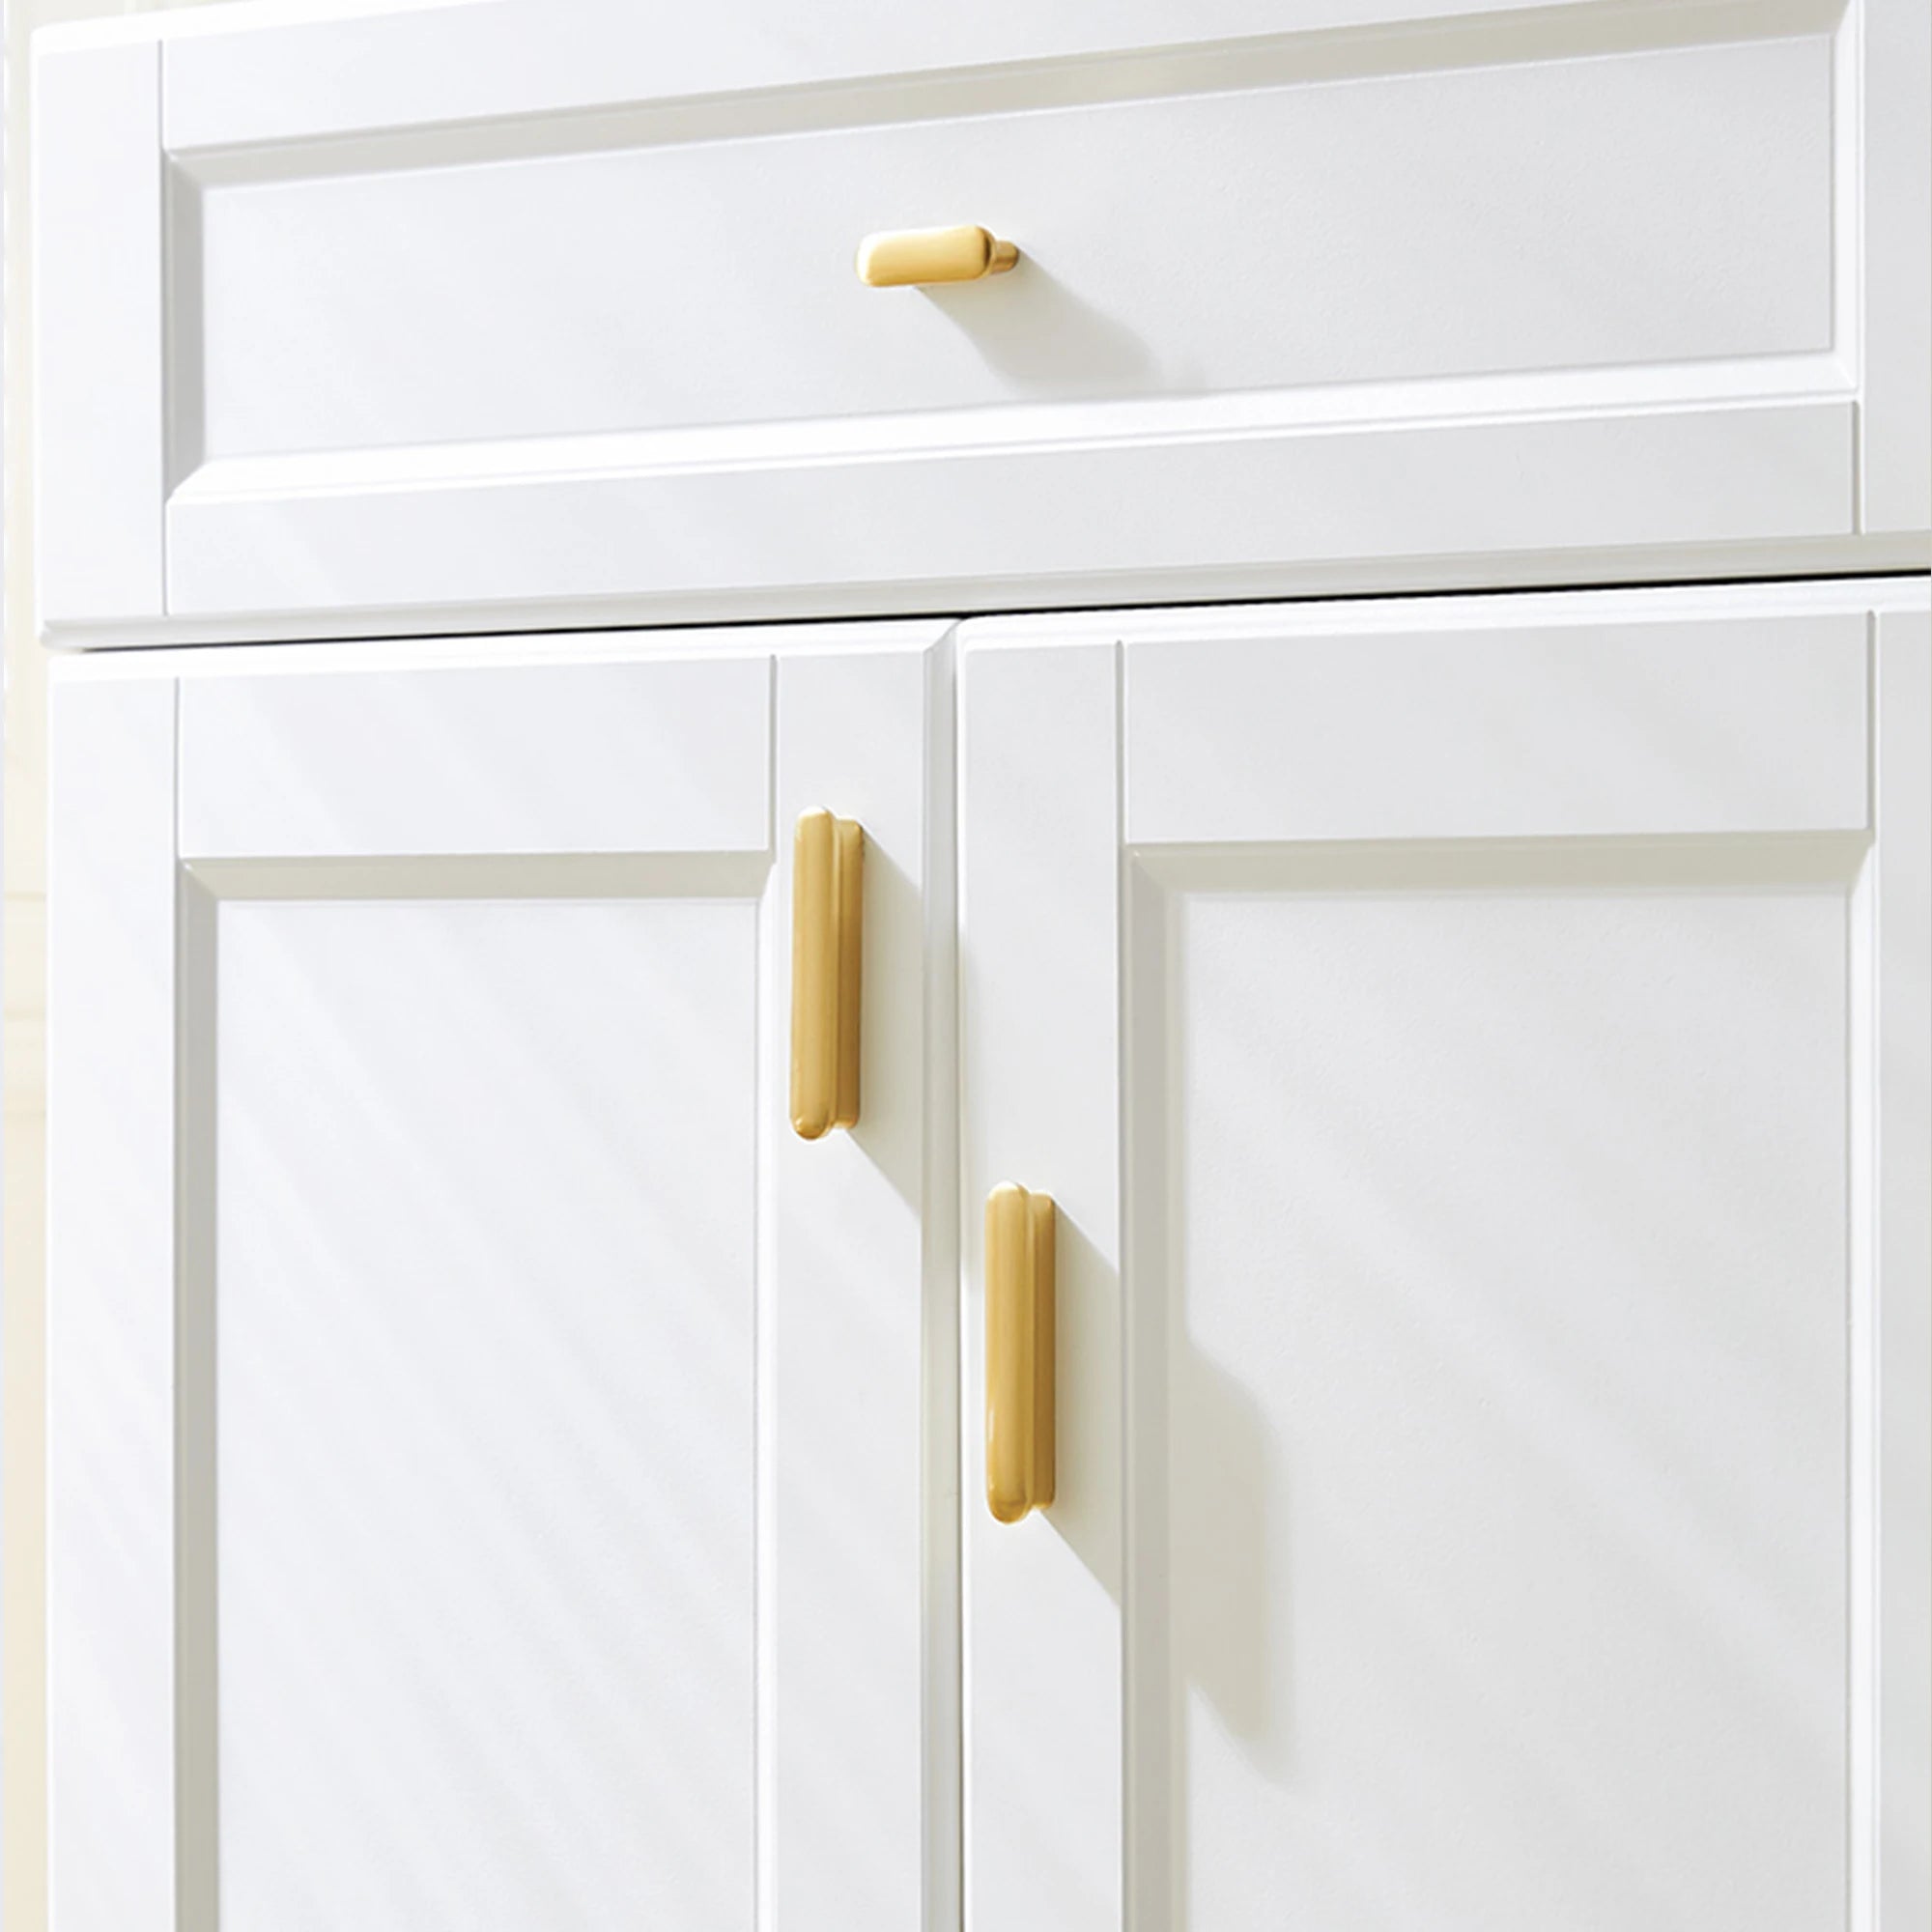 MFYS 32/64mm Hole centers Cabinet Drawer Handles Gold Solid Brass Door Knobs Modern Luxury Furniture Hardware Kitchen Accessory